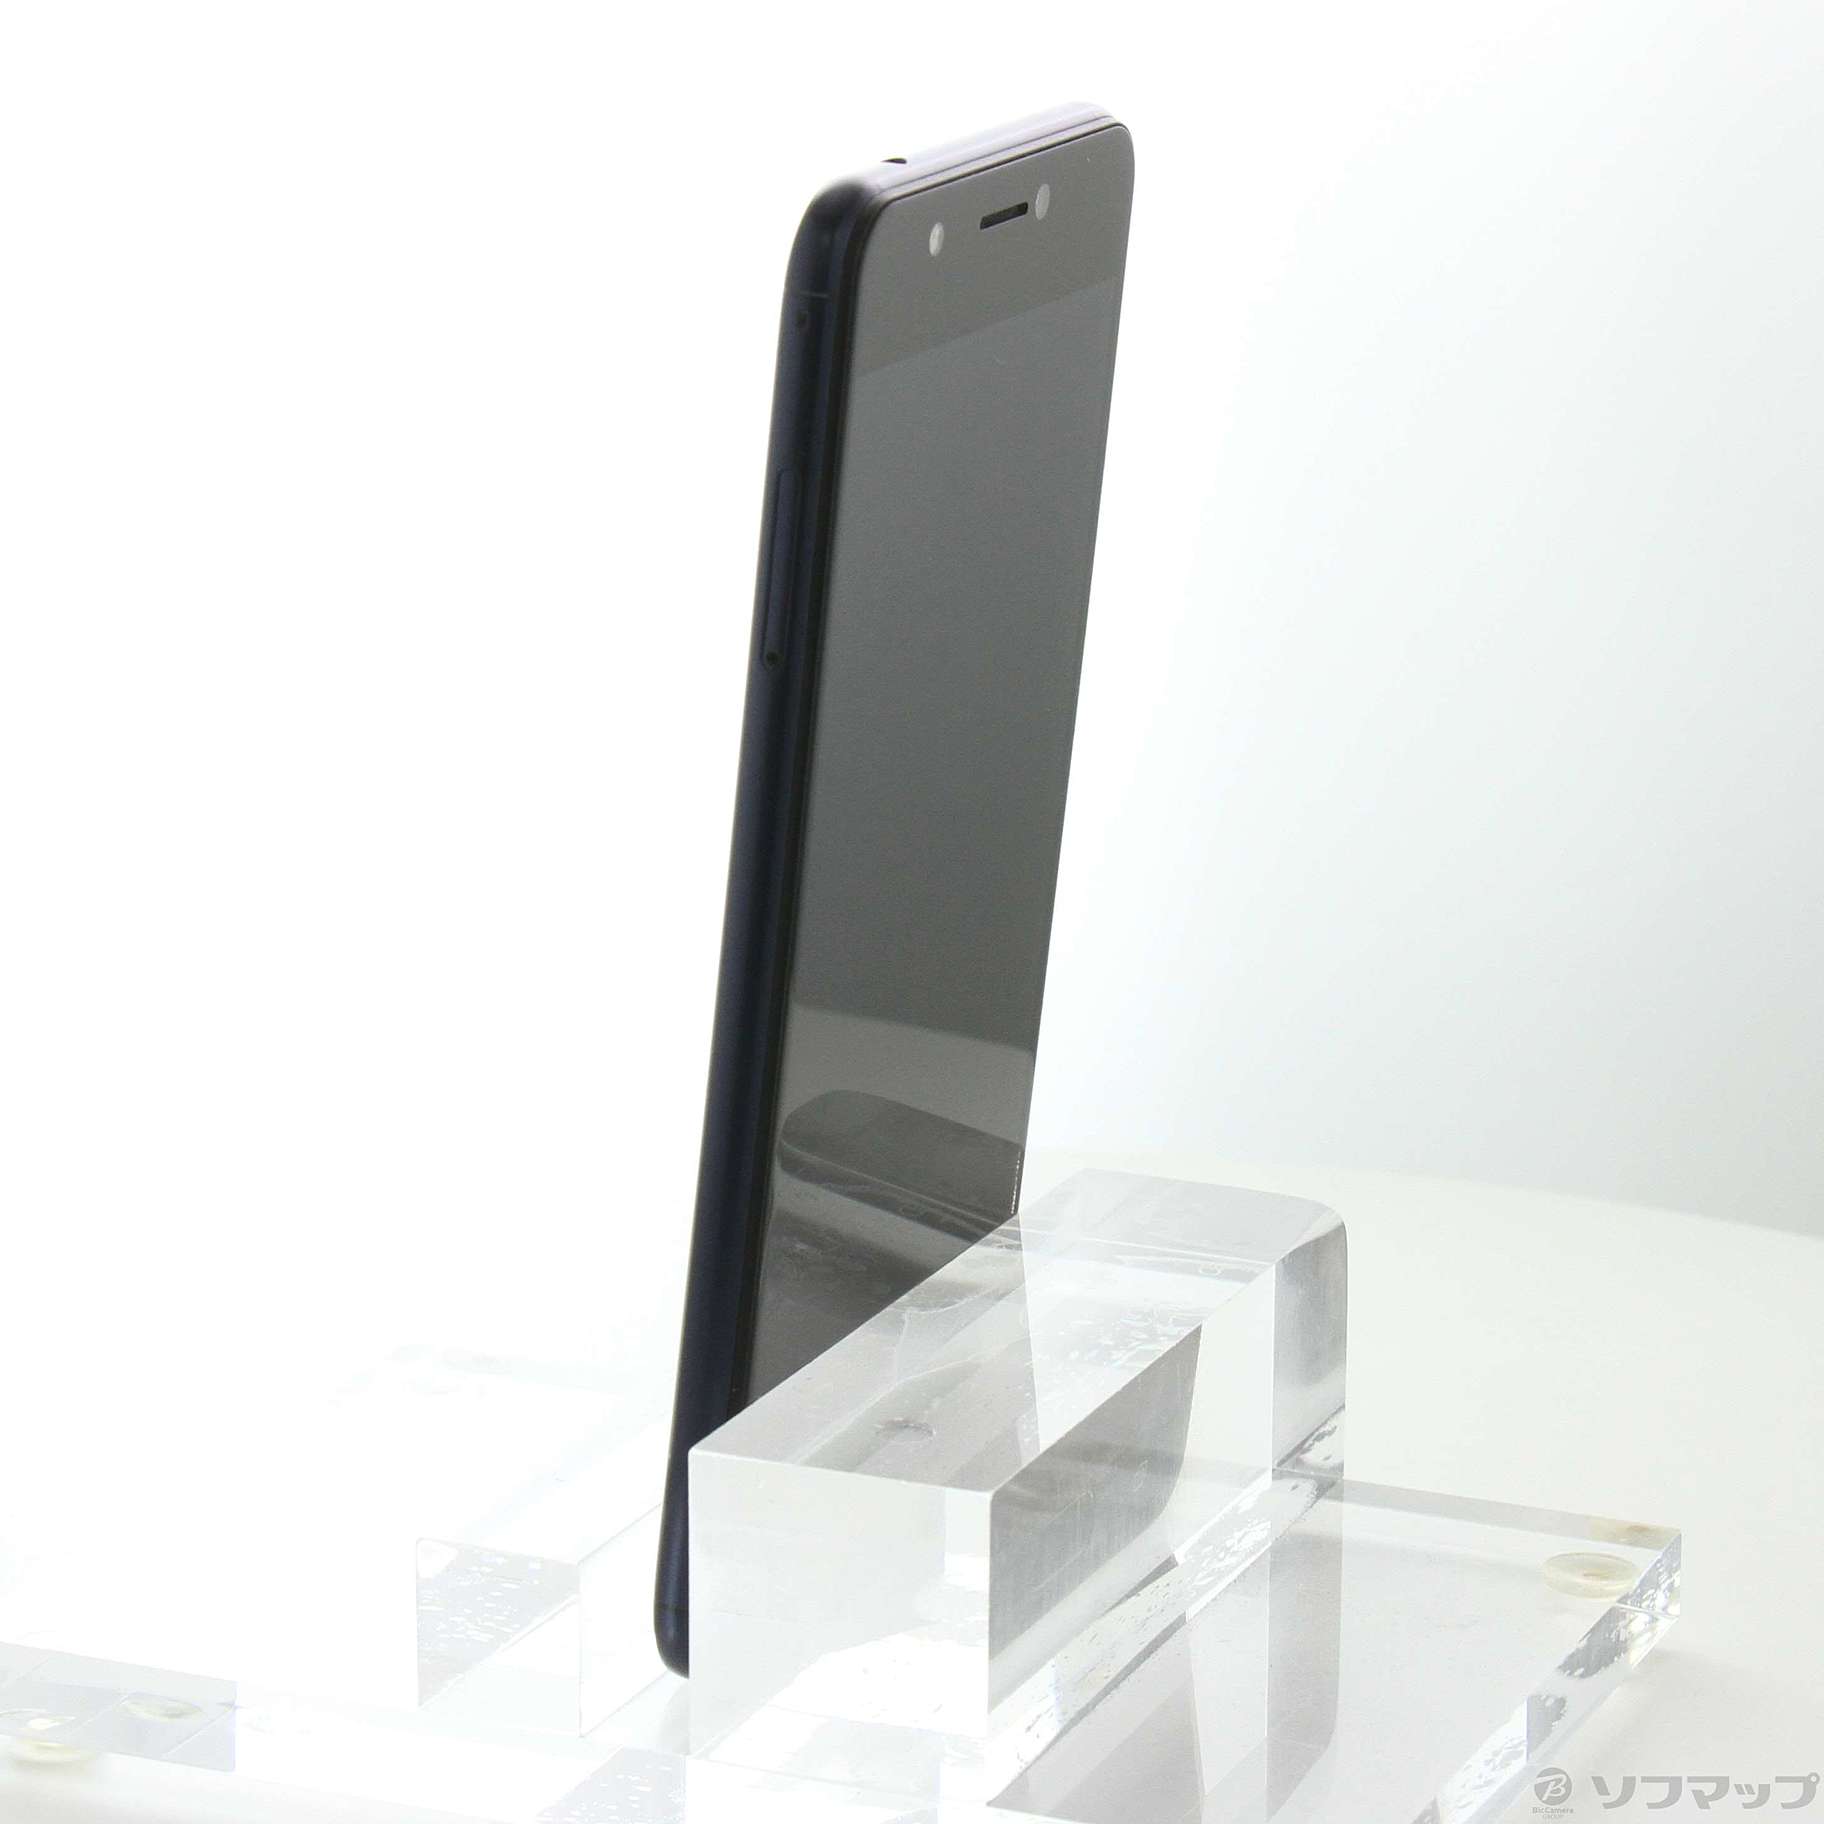 ZenFone 4 Max 32GB ネイビーブラック ZC520KL-BK32S3 SIMフリー